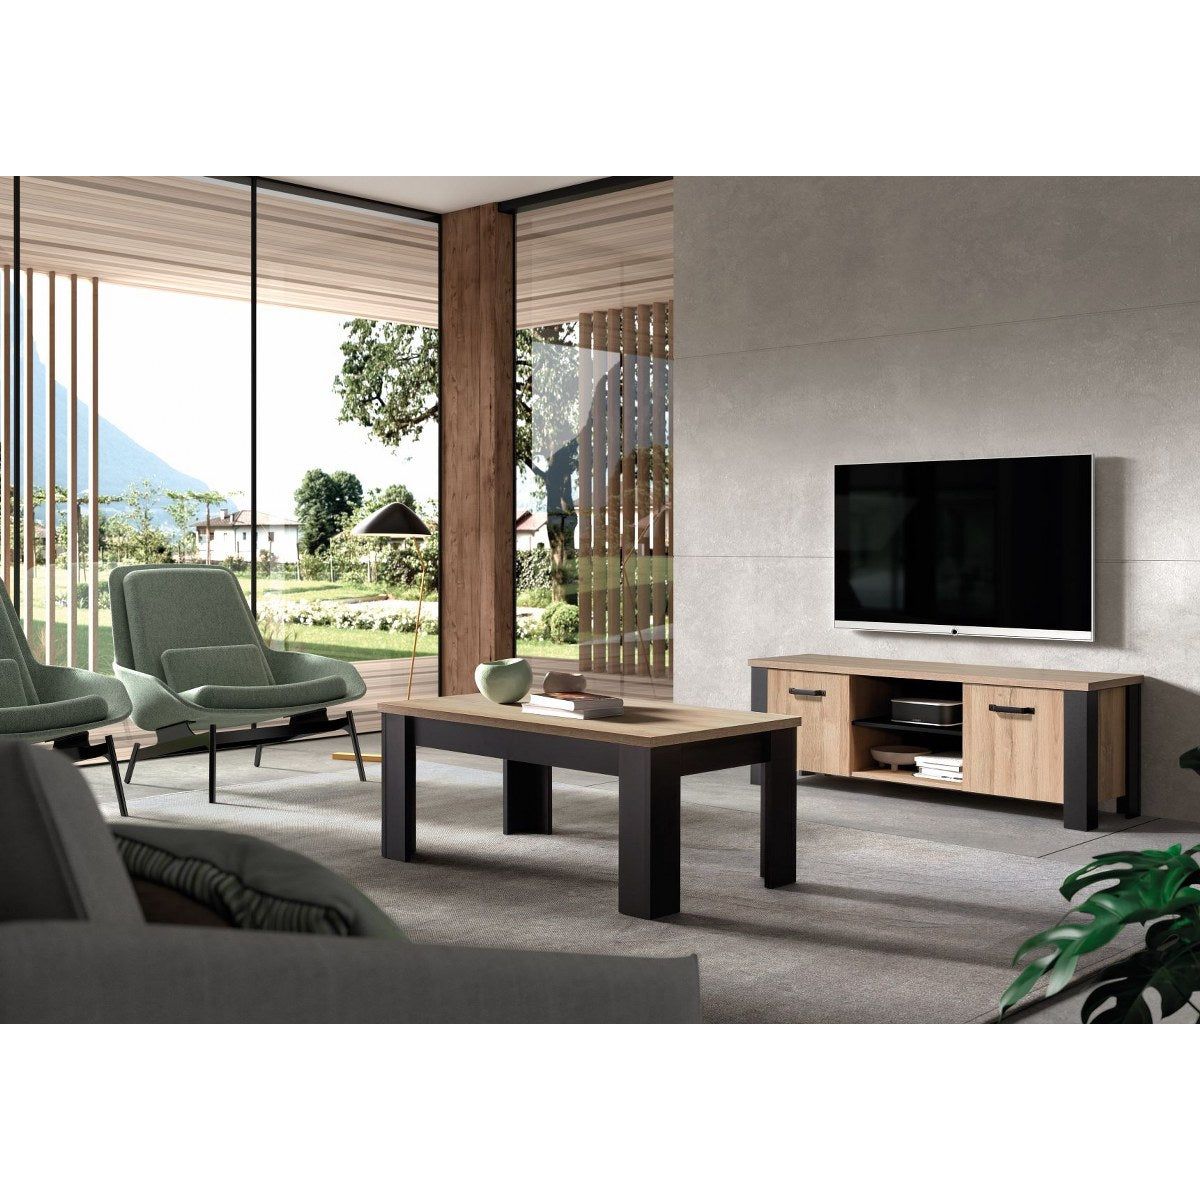 TV cabinet | Furniture series Highlight | brown, natural, black |